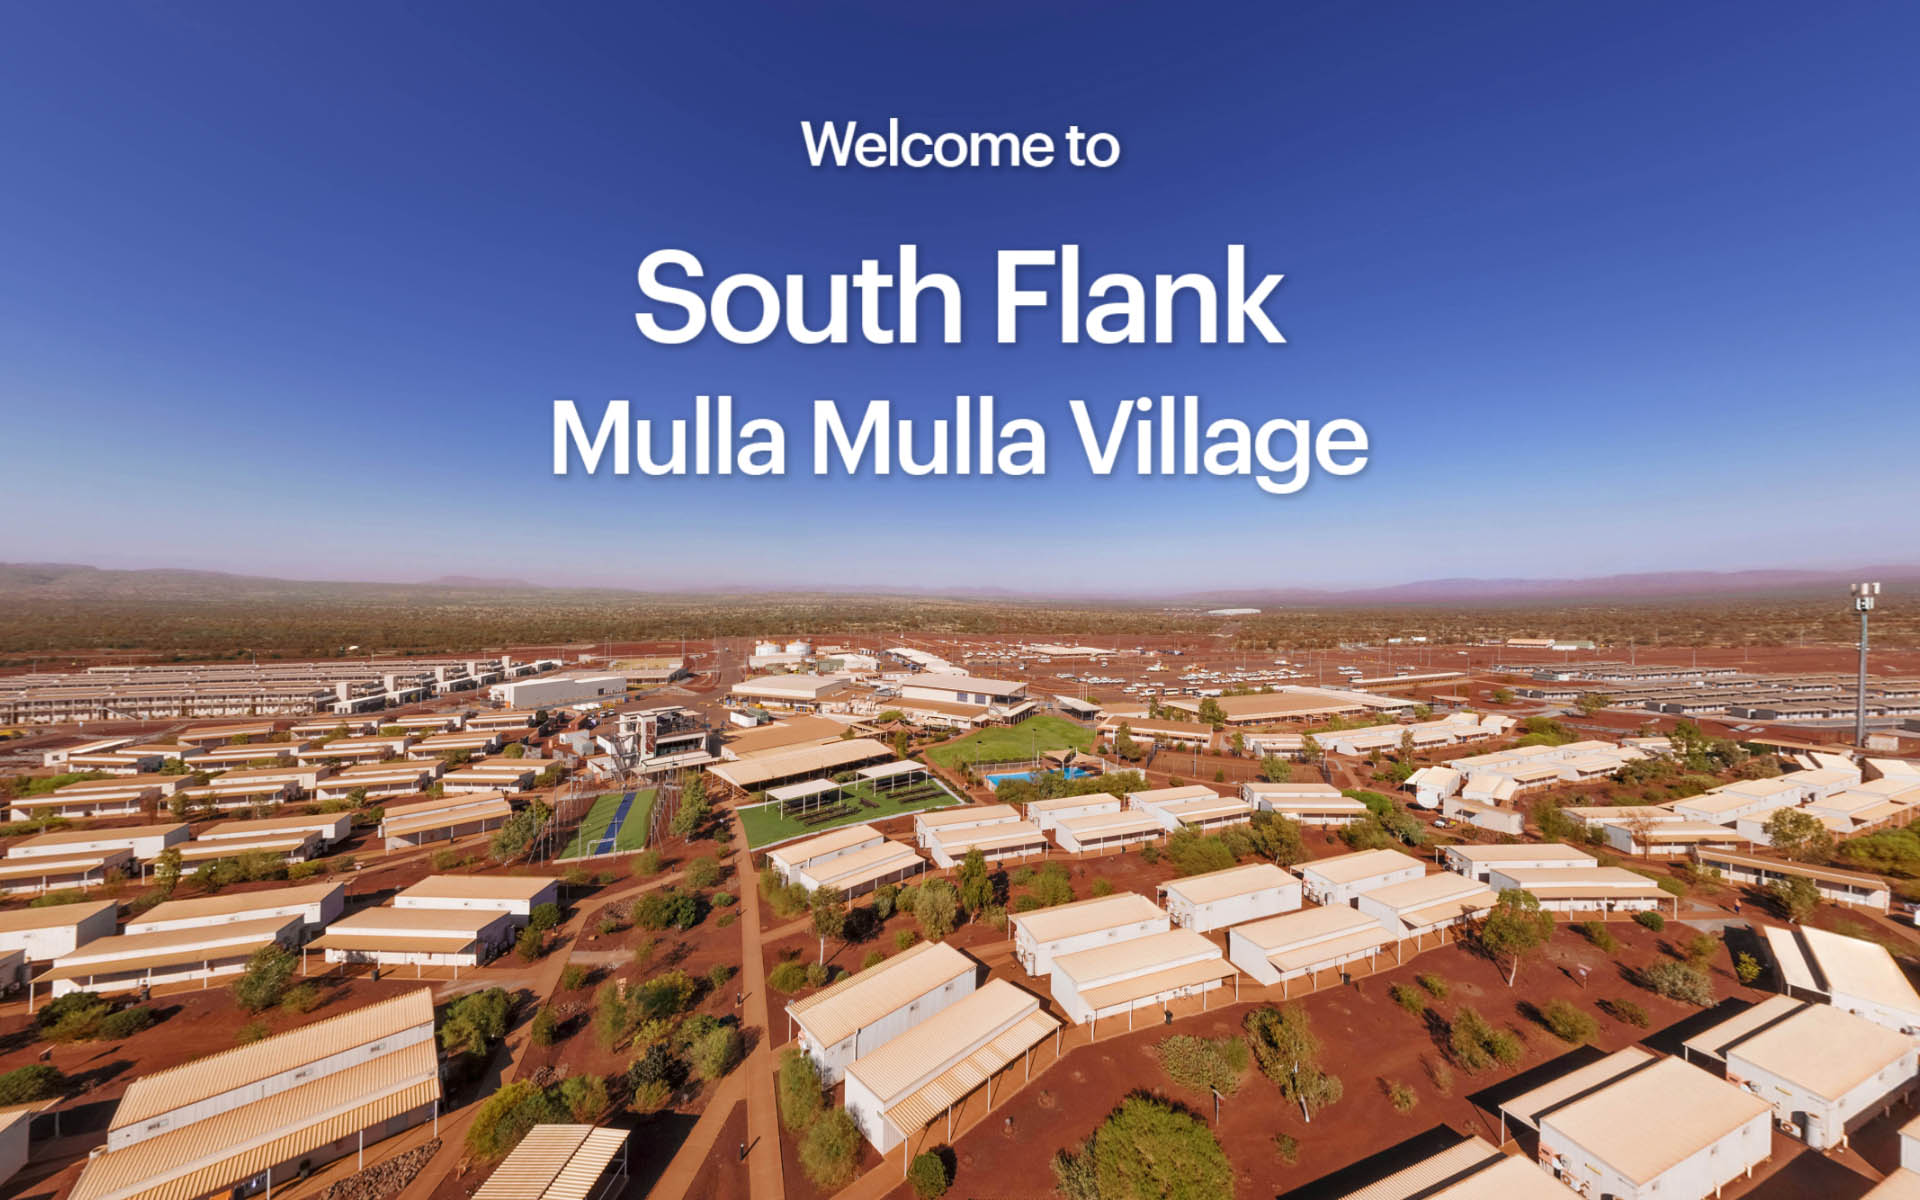 Ariel image of South Flank Mulla Mulla village